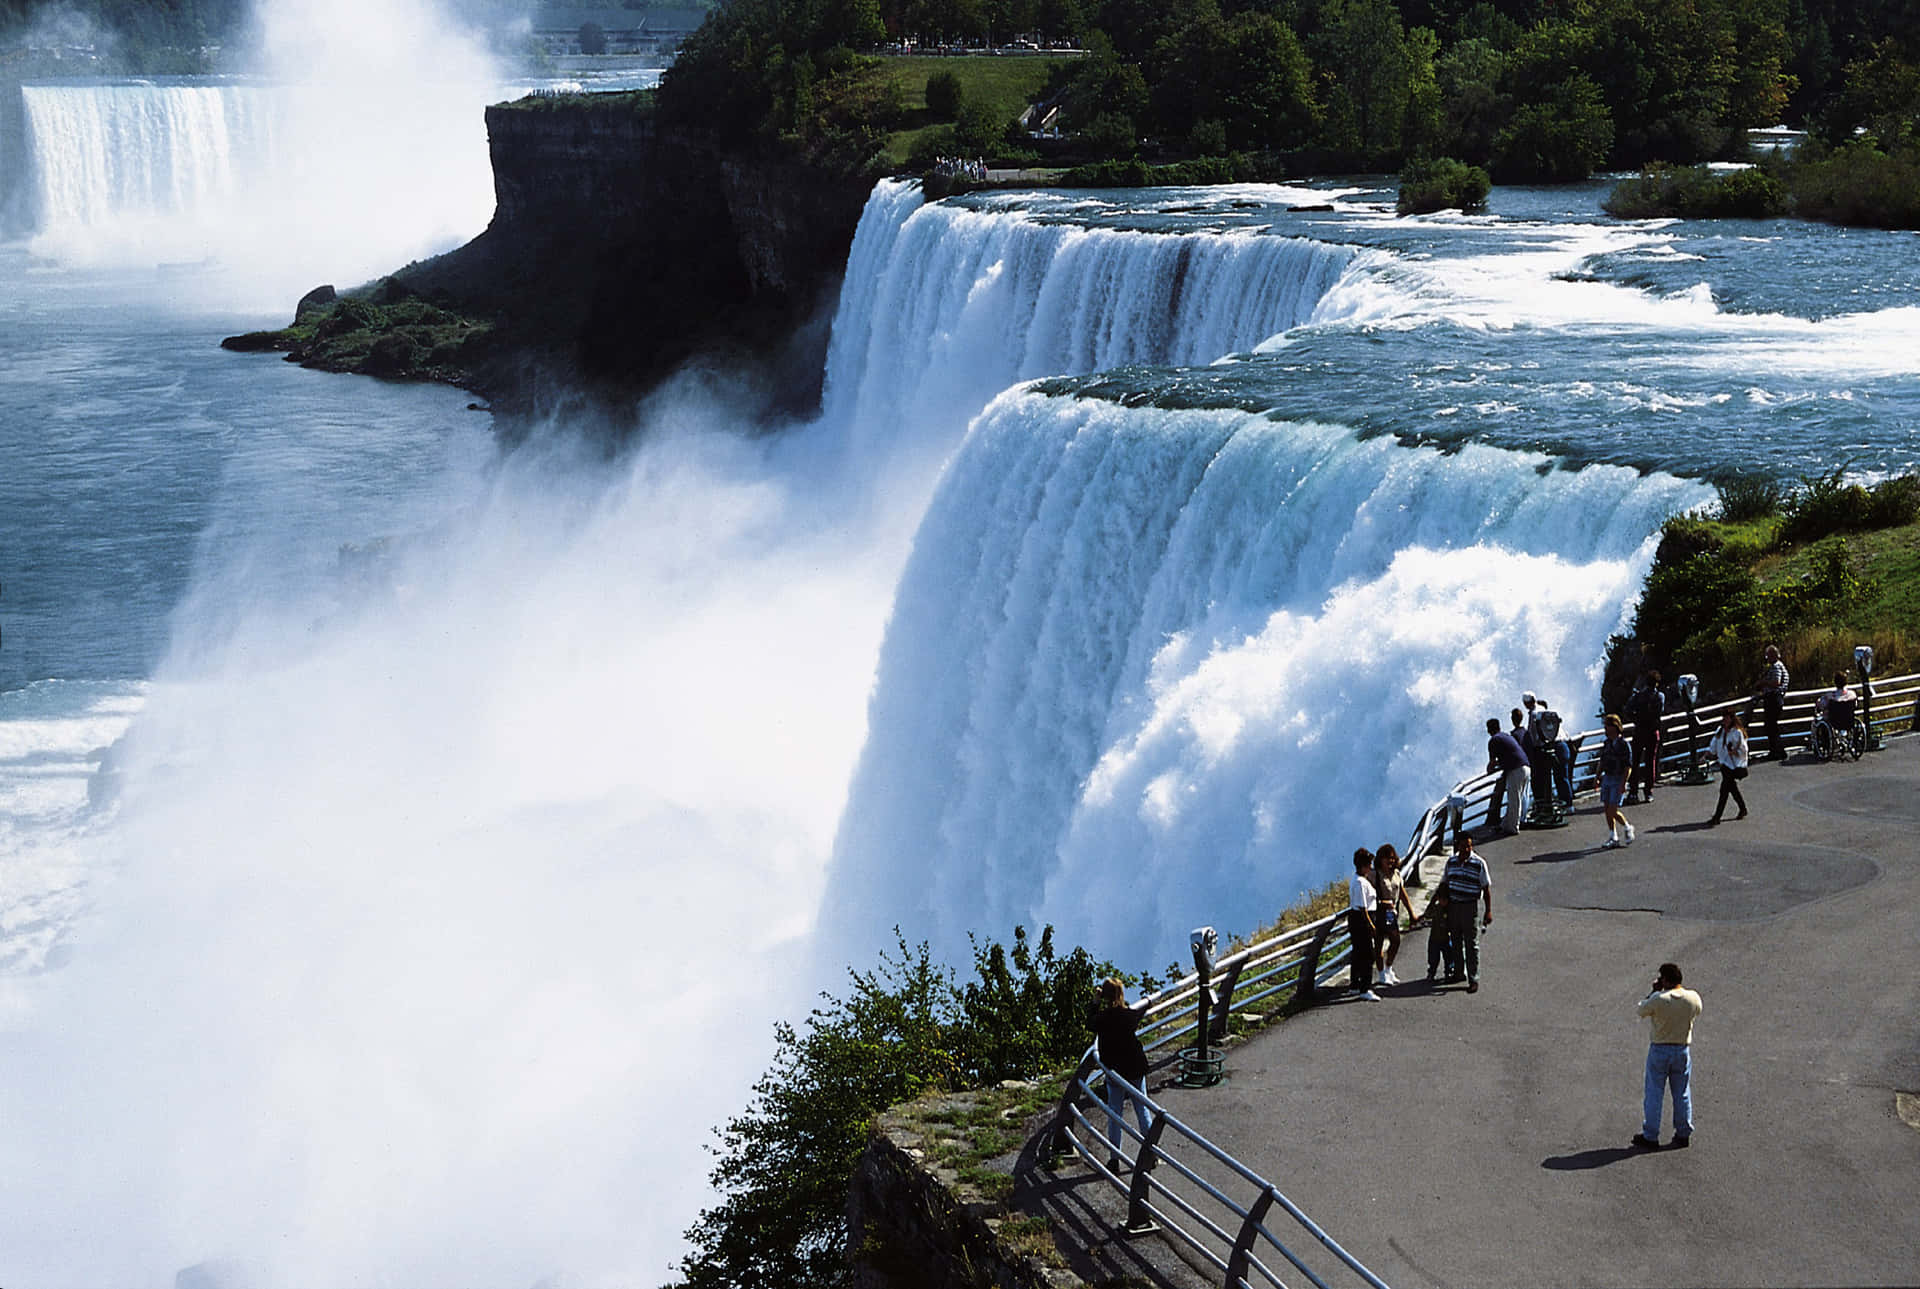 The epic beauty of Niagara Falls